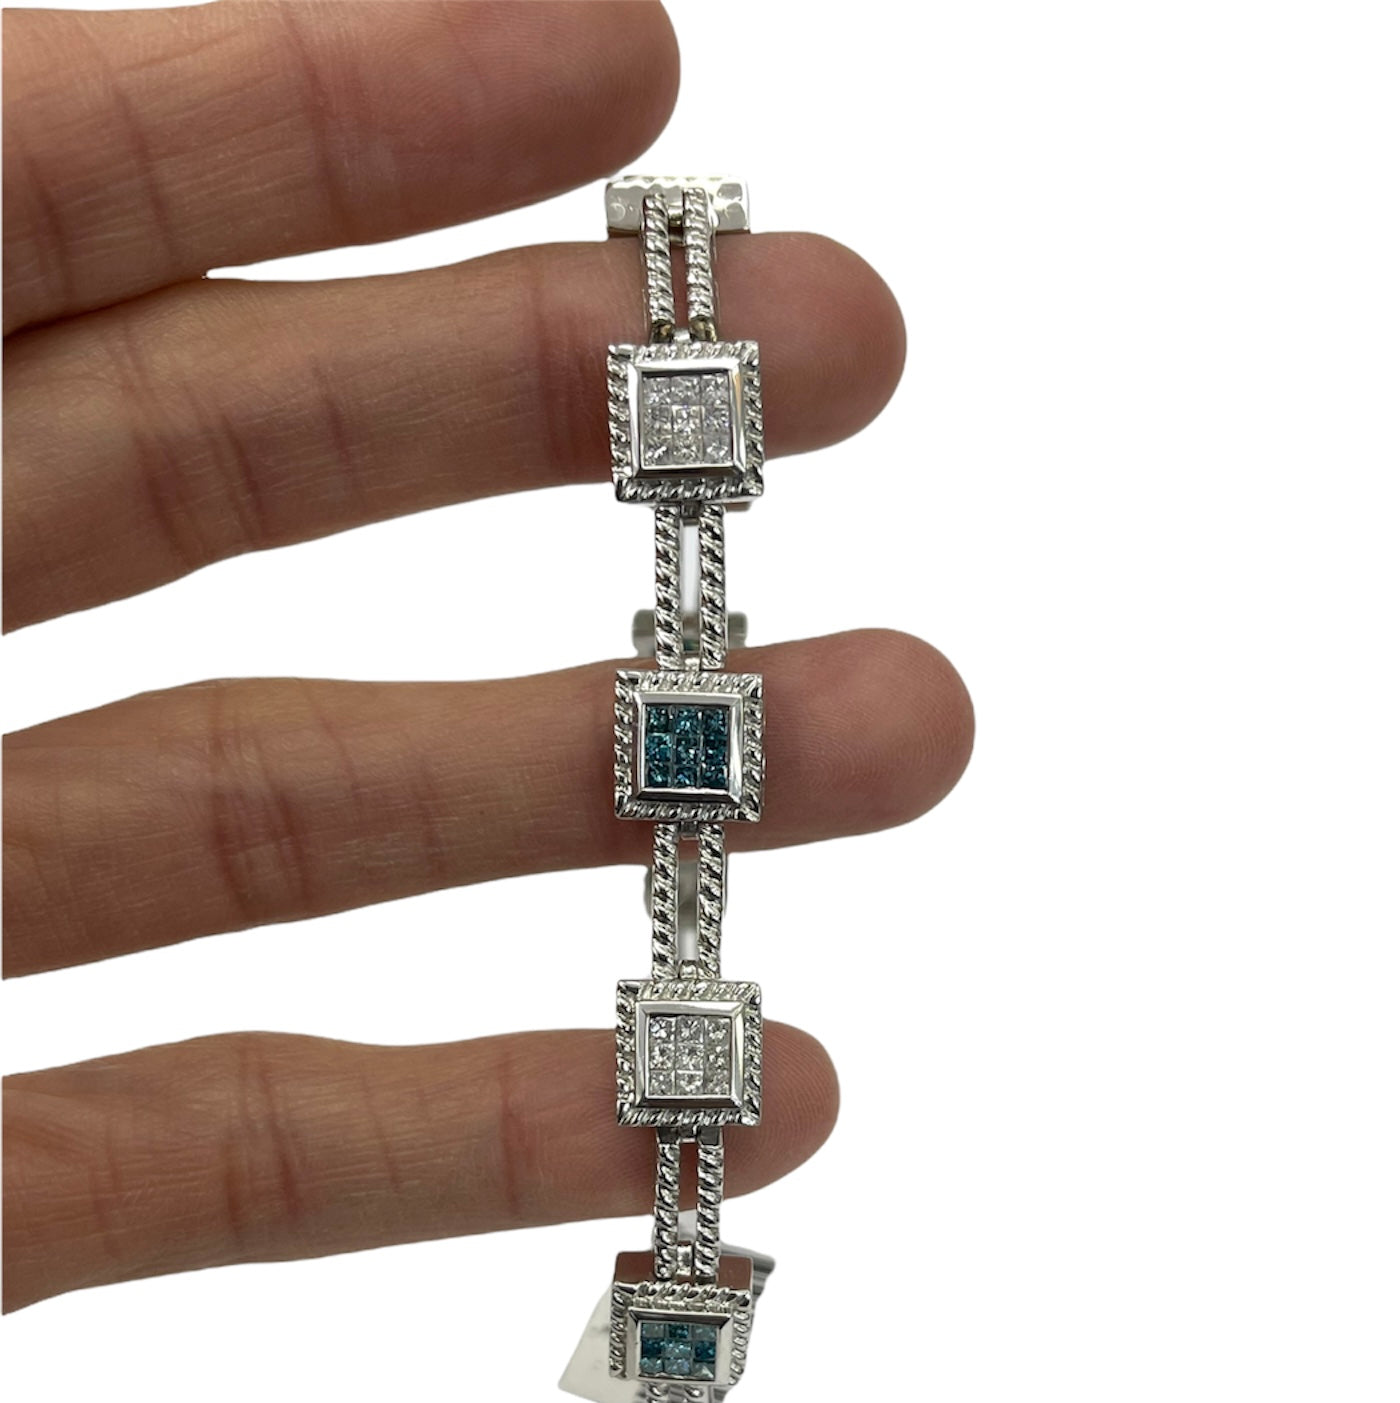 Blue and White Princess Cut Diamond Bracelet Box Chain White Gold